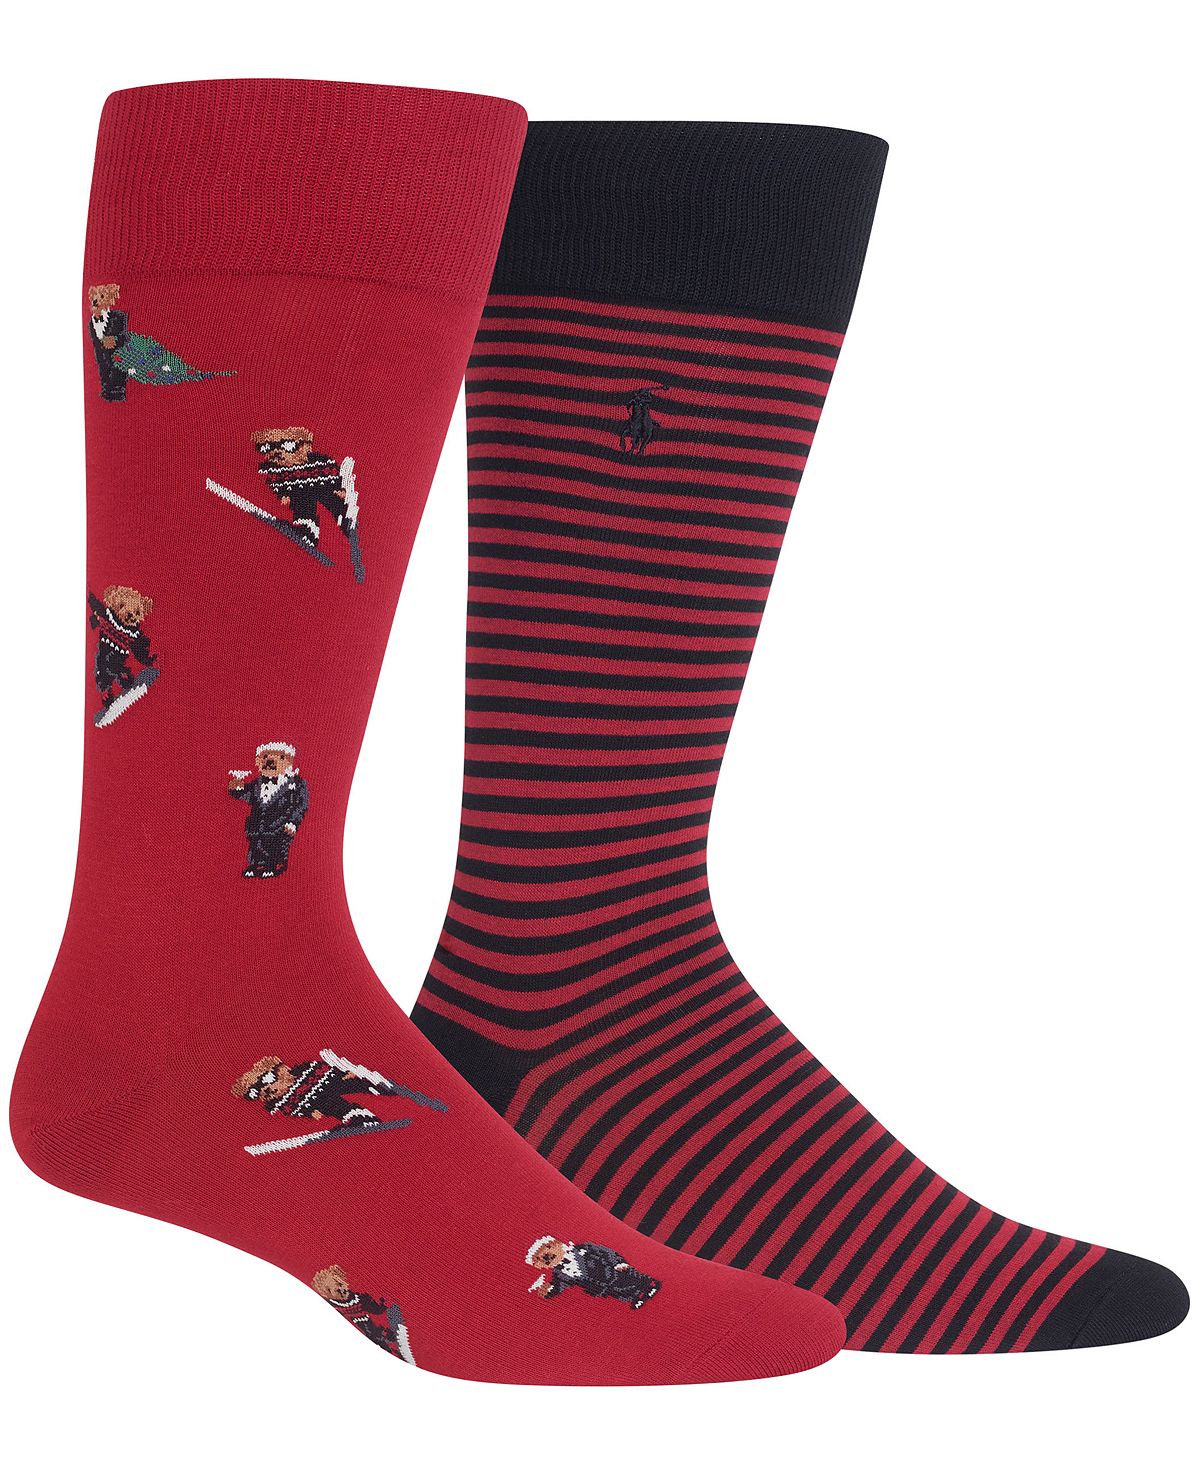 Polo Ralph Lauren 2-pk. Festive Bears Dress/casual Socks Red